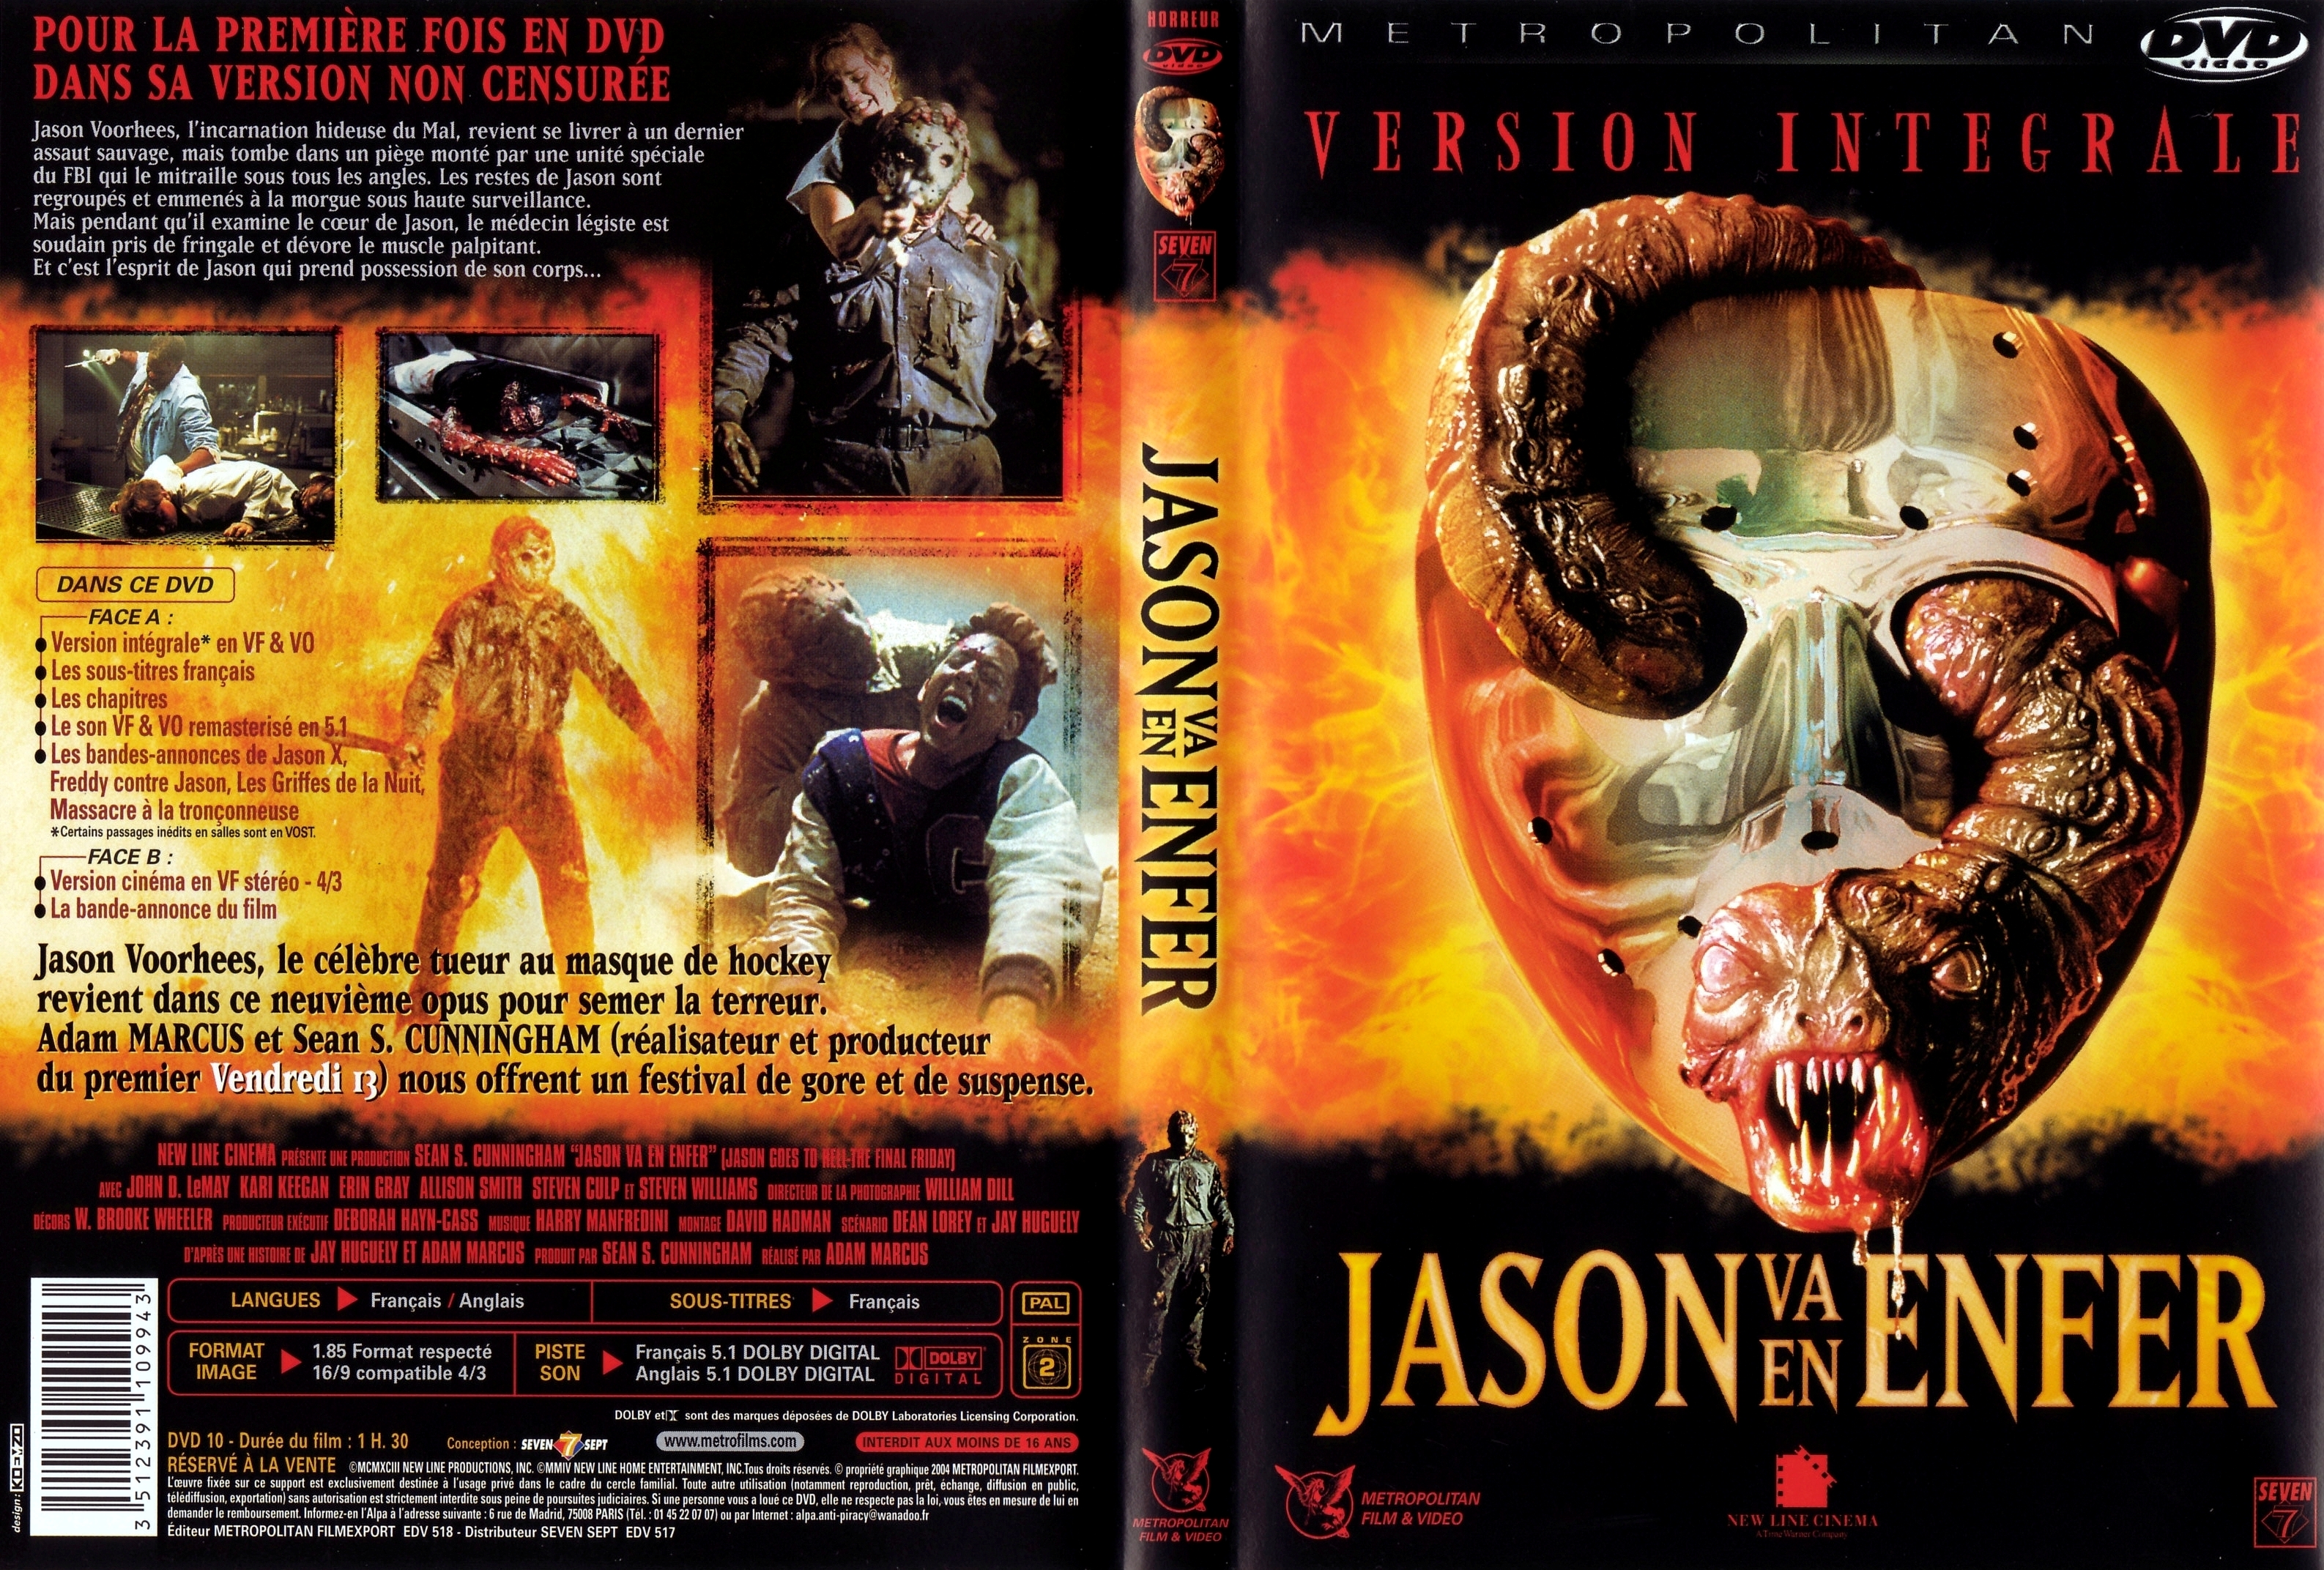 Jaquette DVD Jason va en enfer v2